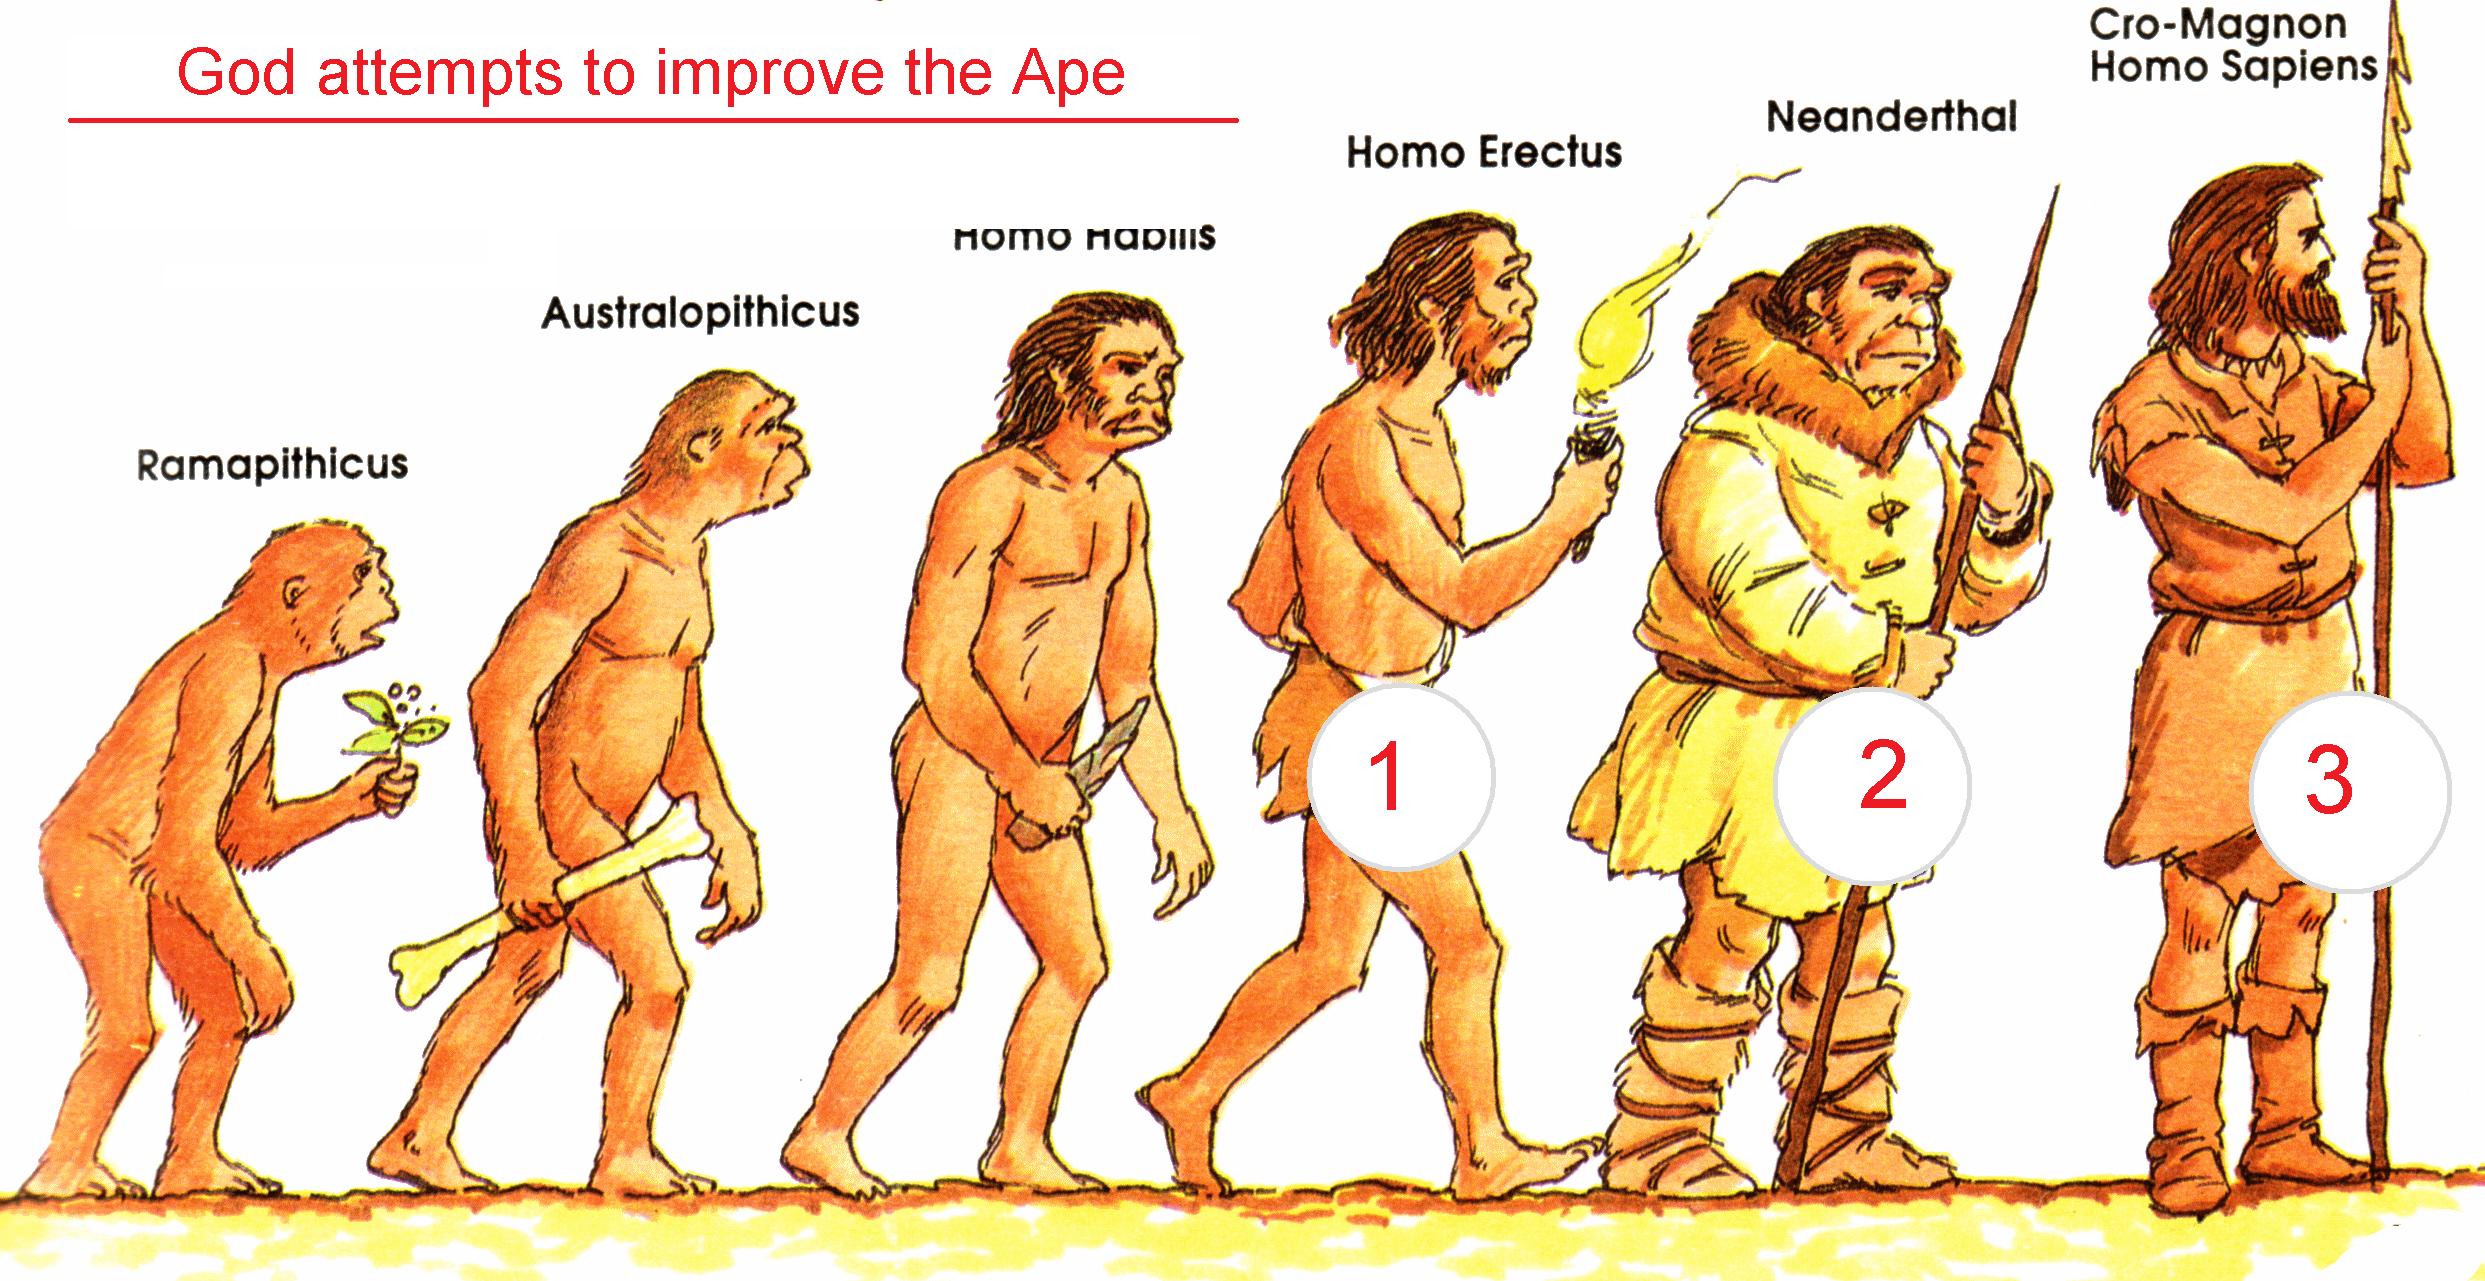 Названия людей раньше. Эволюция человека хомо сапиенс. Человек разумный разумный homo sapiens sapiens. Эволюция человека неандерталец кроманьонец. Хомо сапиенс неандерталец кроманьонец.